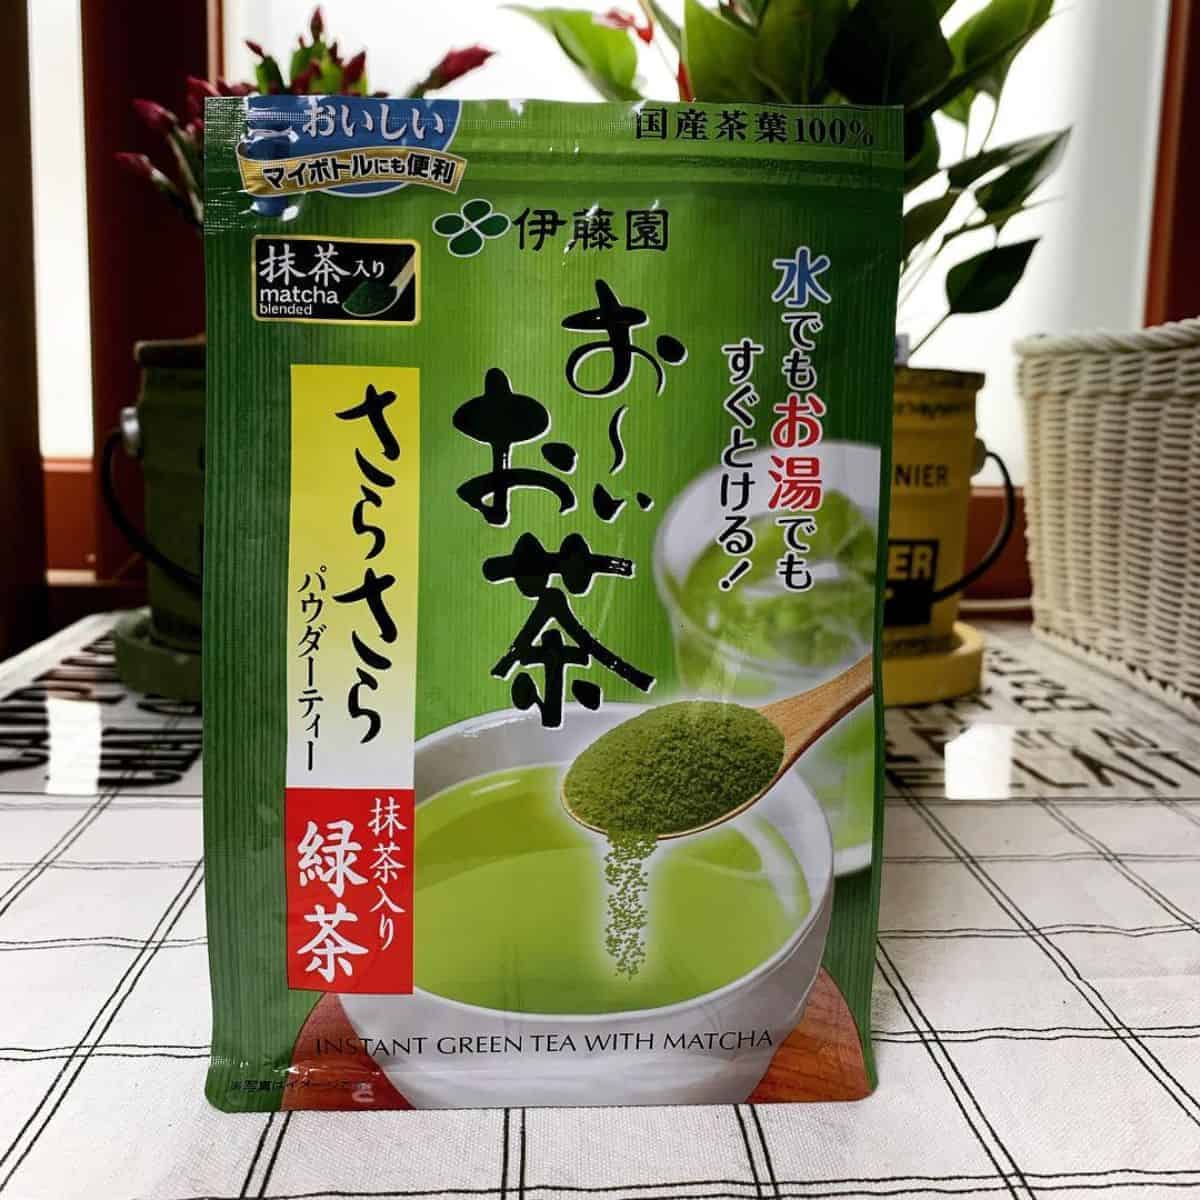 One sachet of Matcha milk tea powder from Ito En